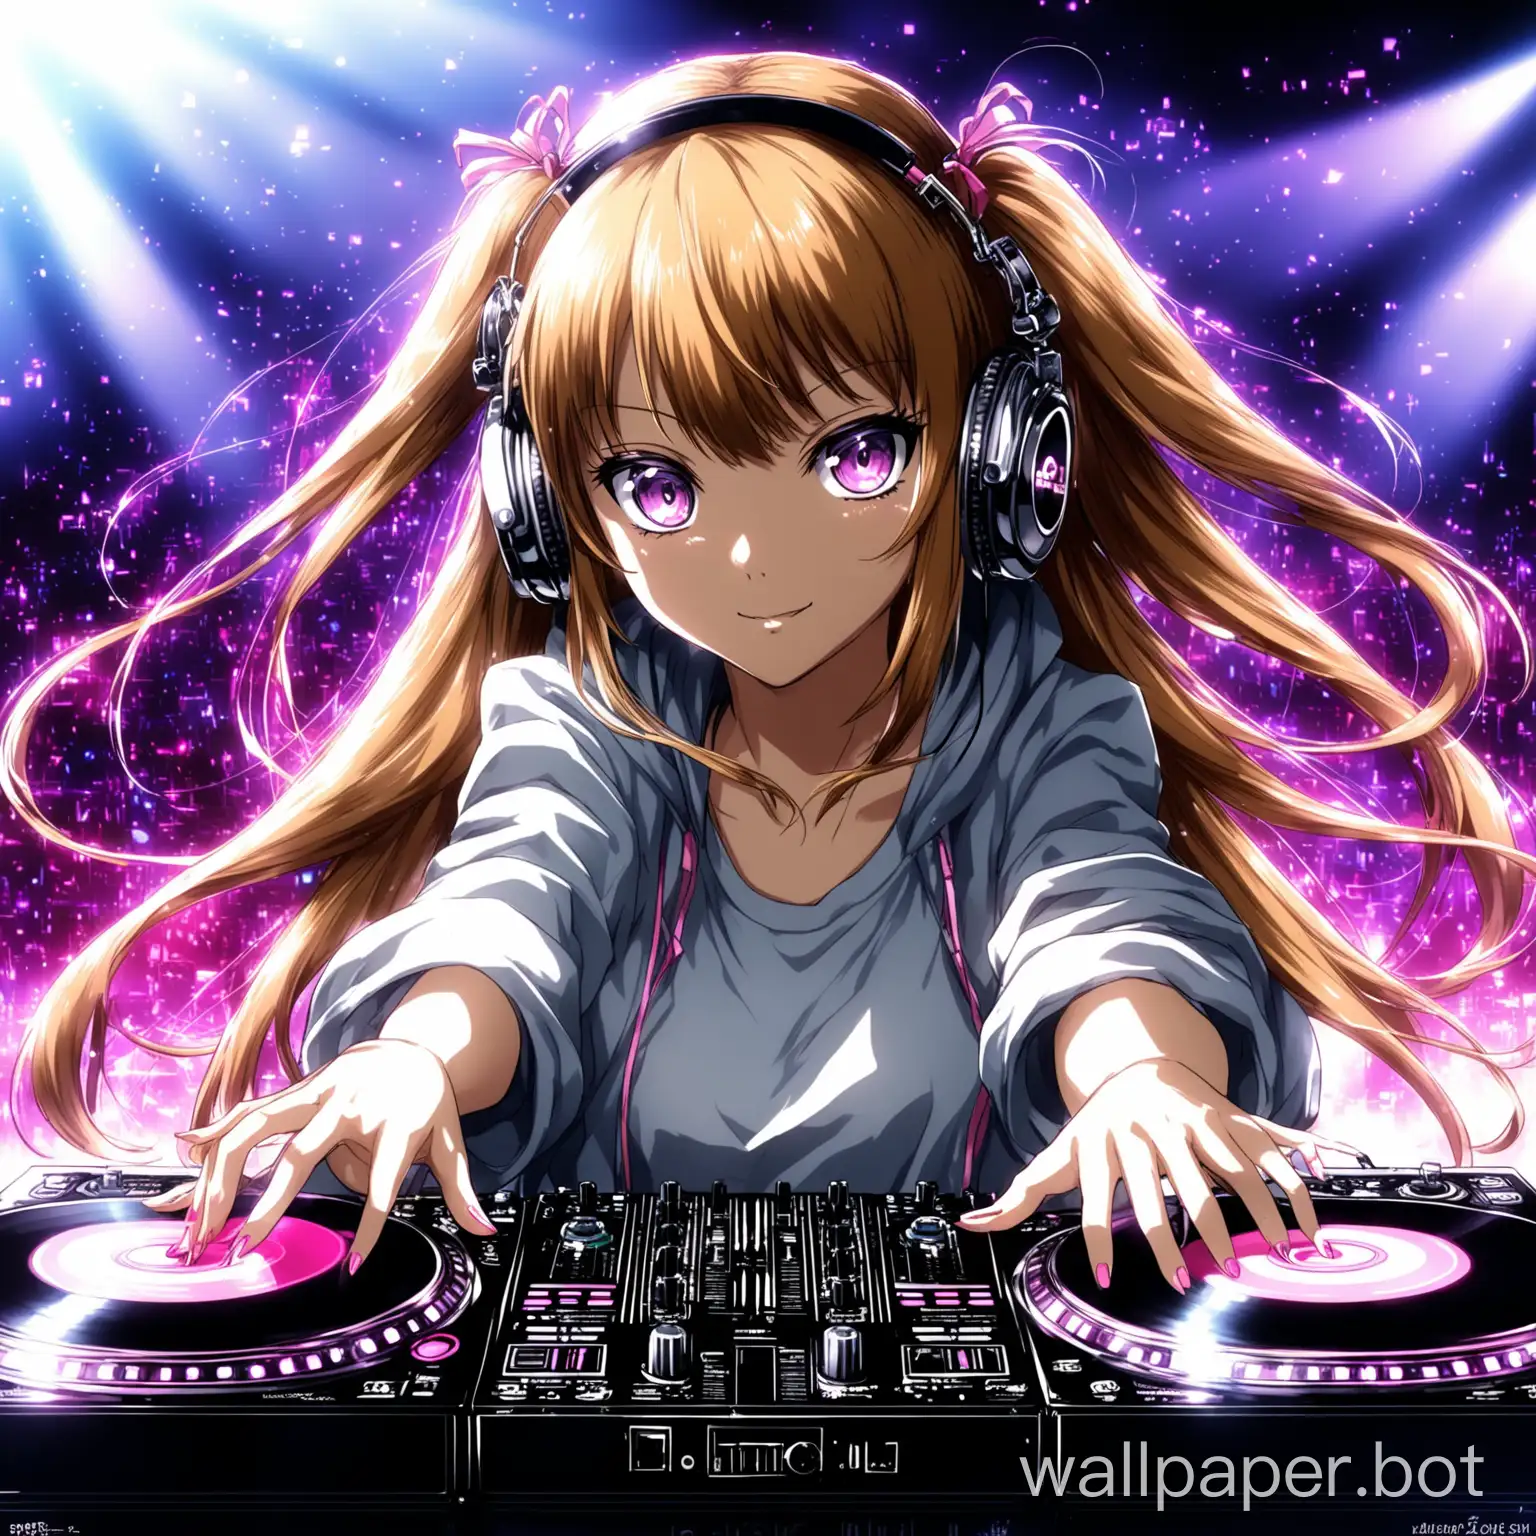 Anime-Girl-DJ-Mixing-Music-in-Vibrant-Neon-Atmosphere